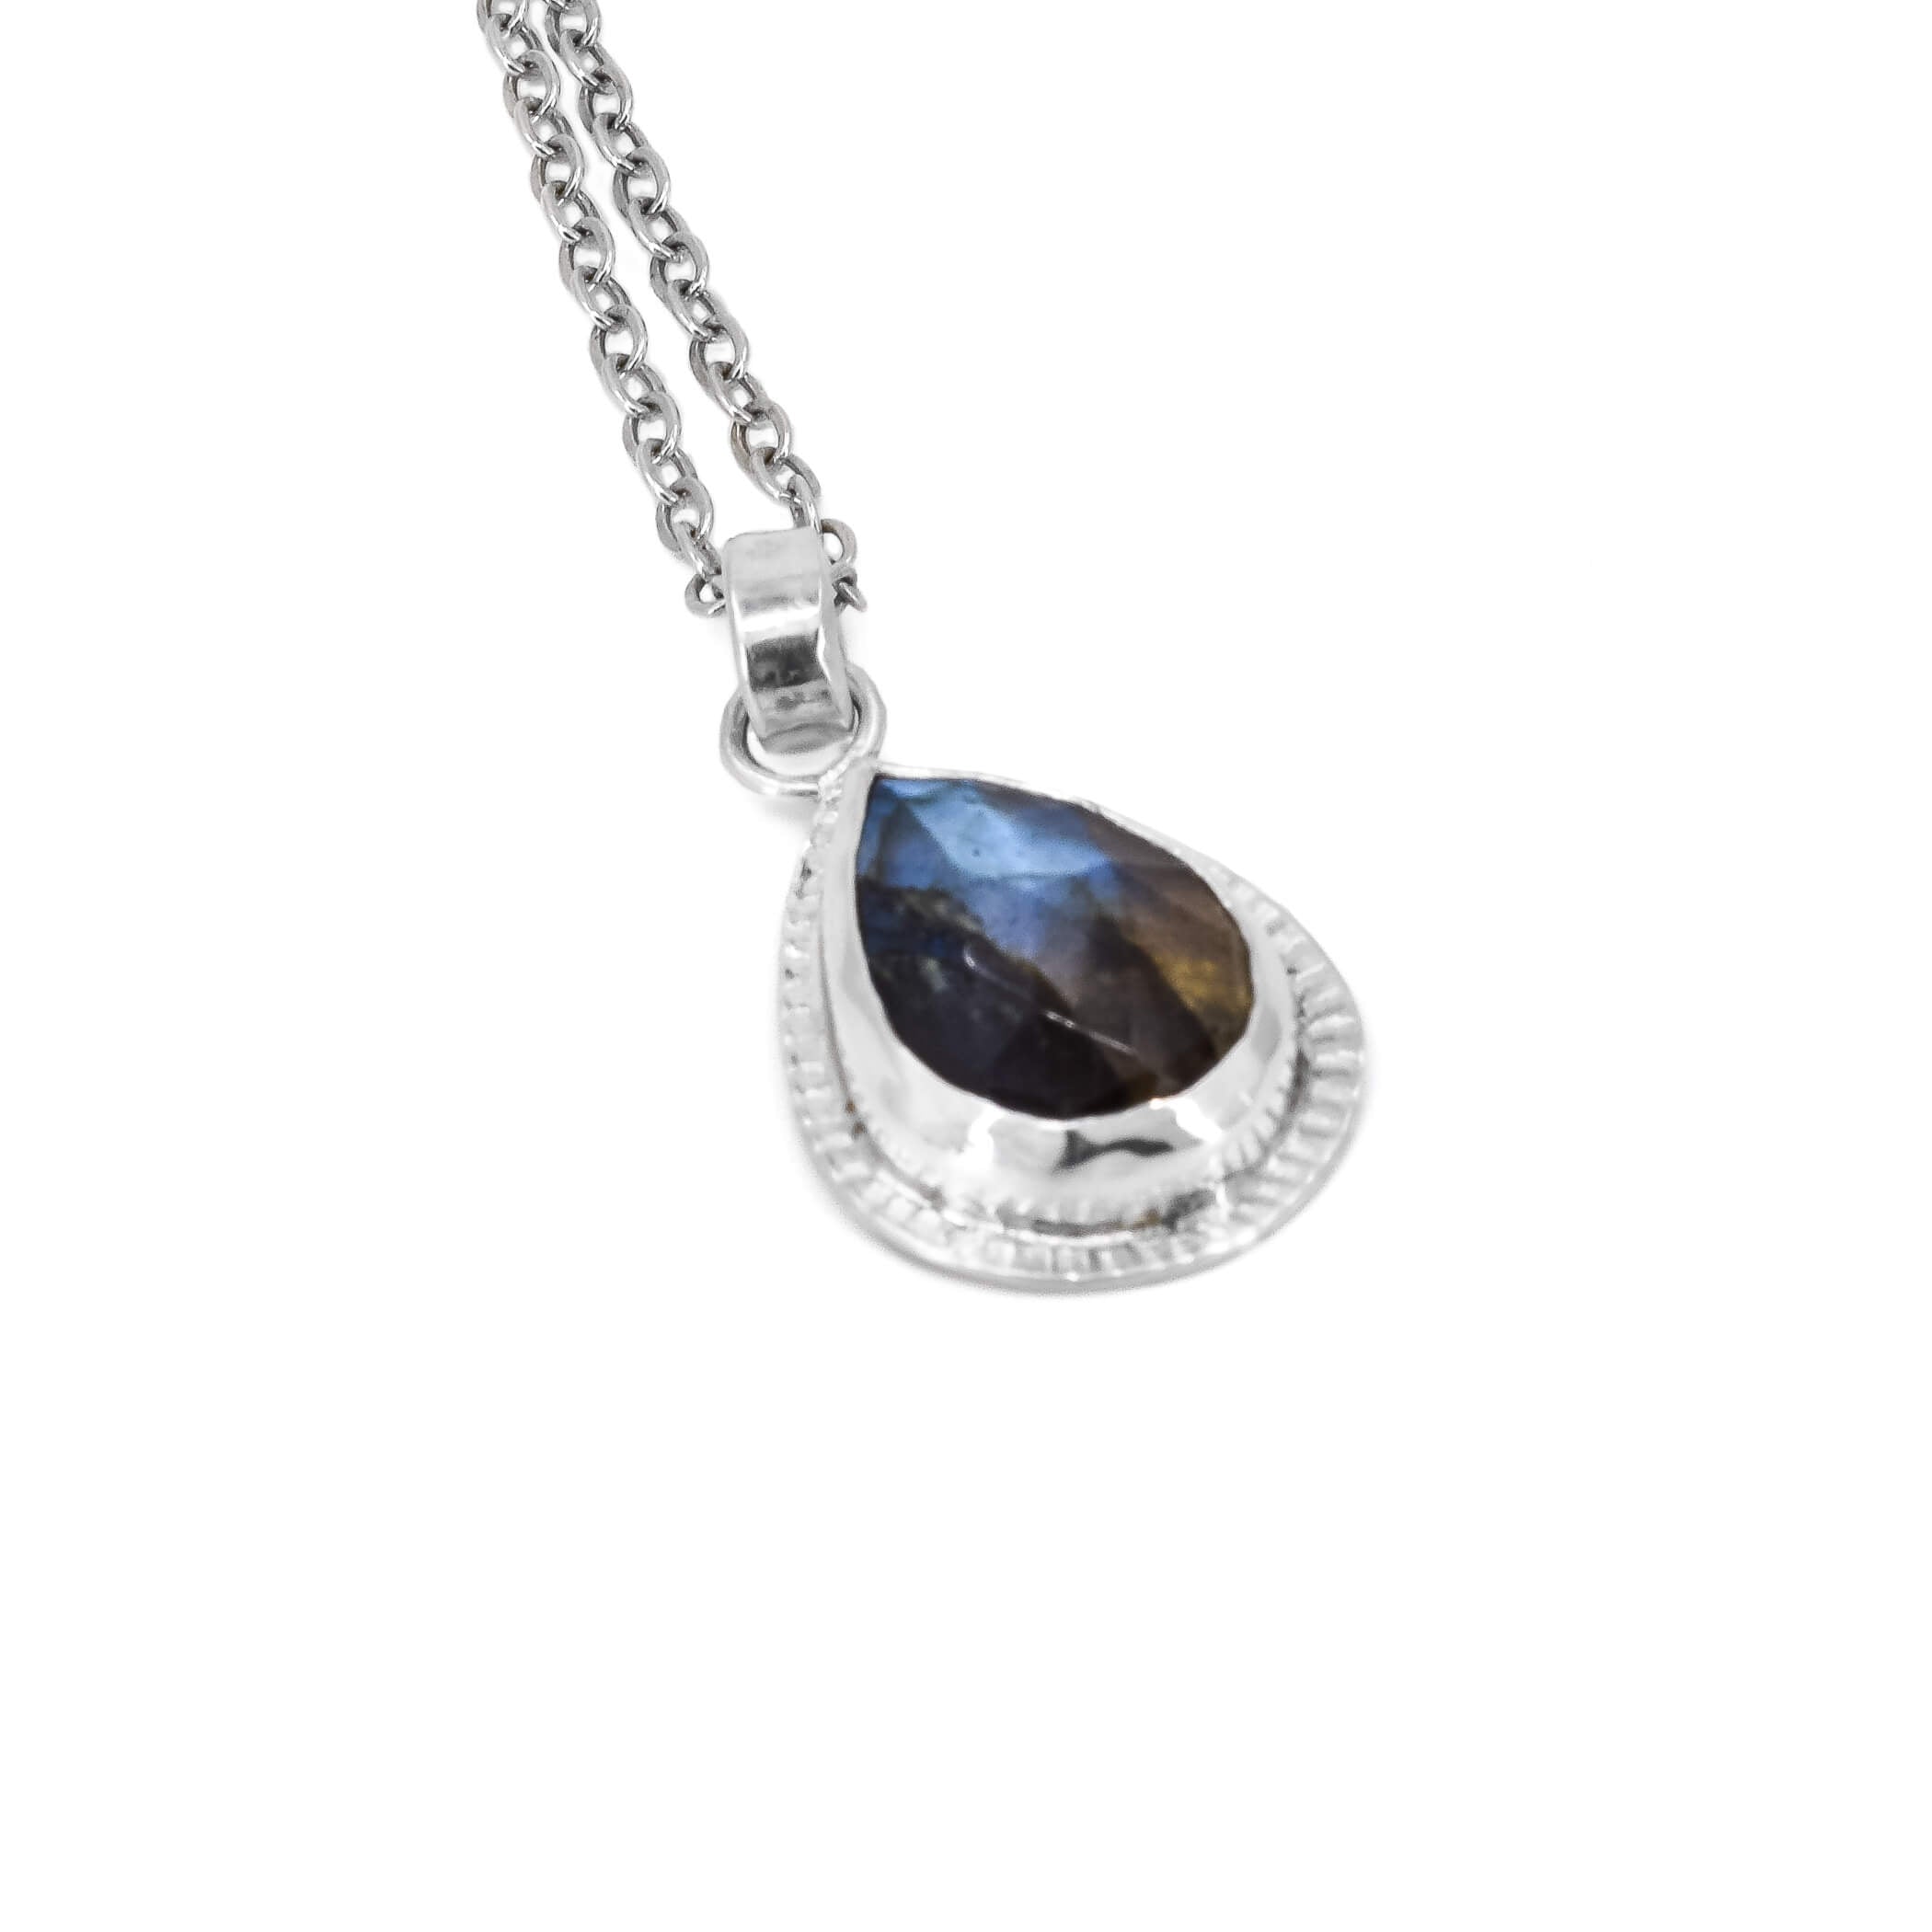 teardrop labradorite pendant necklace in sterling silver